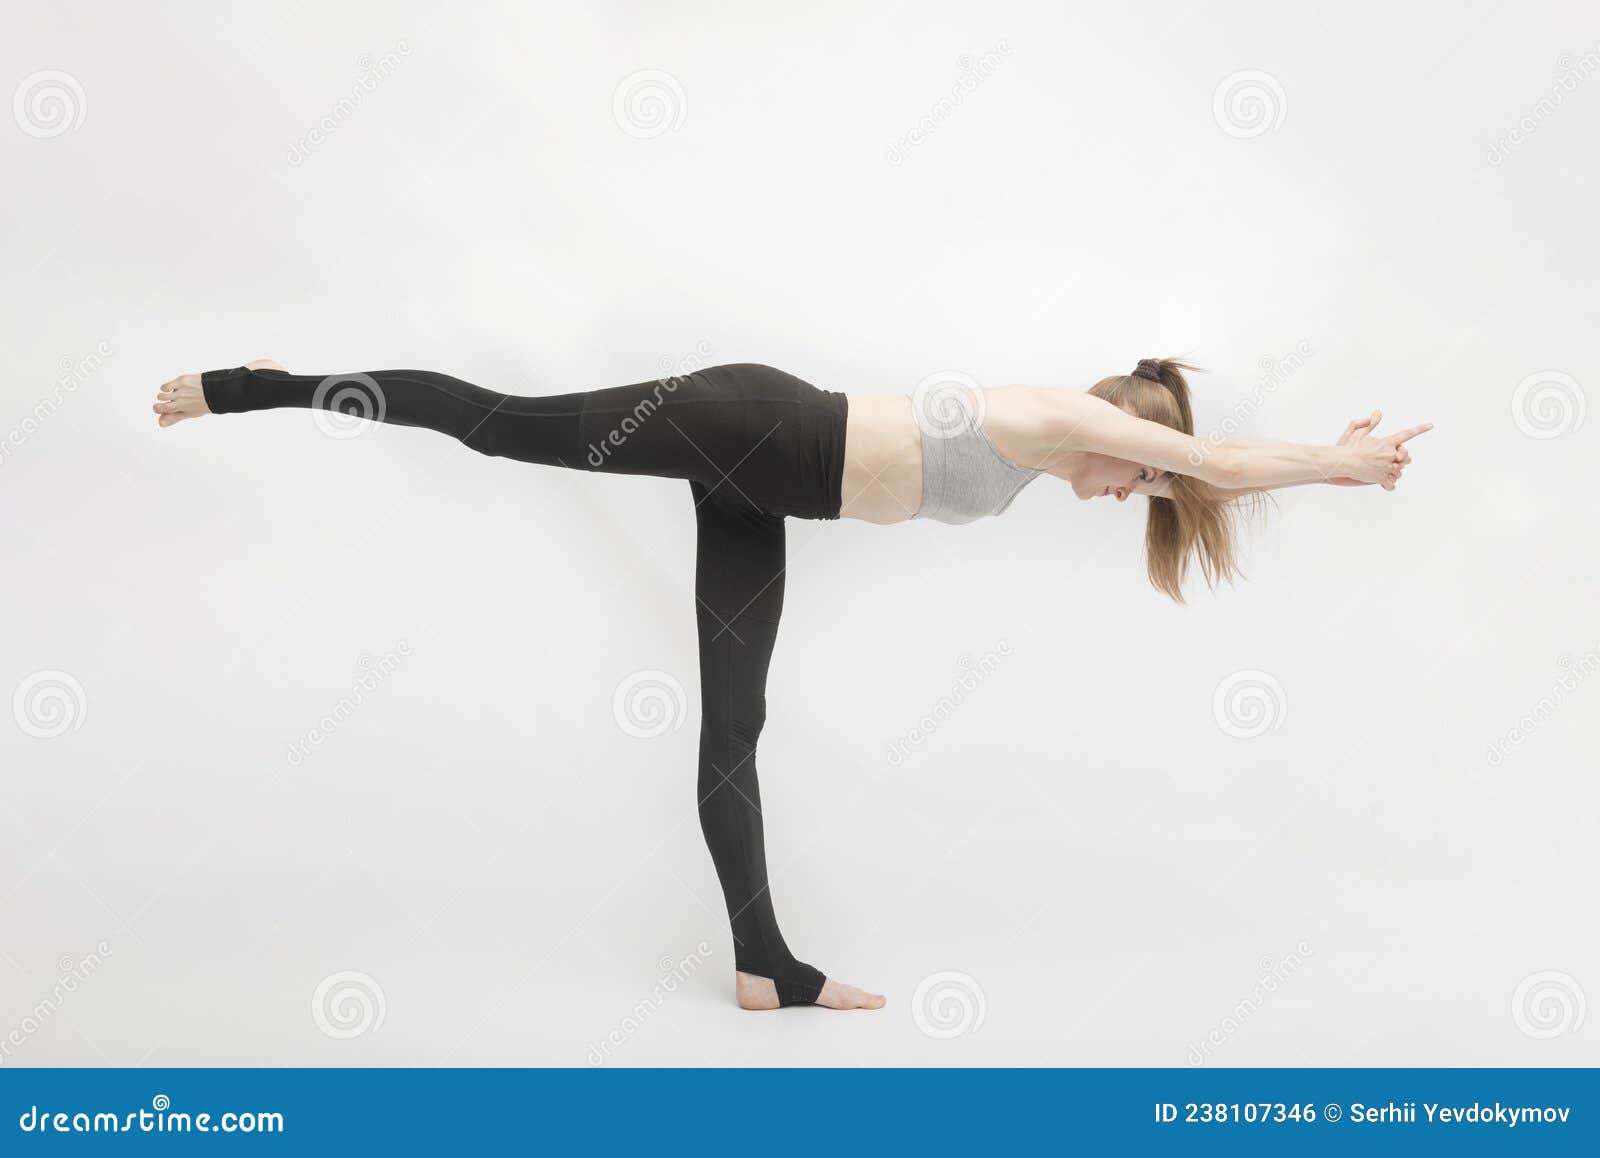 https://thumbs.dreamstime.com/z/balancing-stick-pose-tuladandasana-side-view-portrait-beautiful-young-woman-doing-yoga-gymnastics-white-background-238107346.jpg